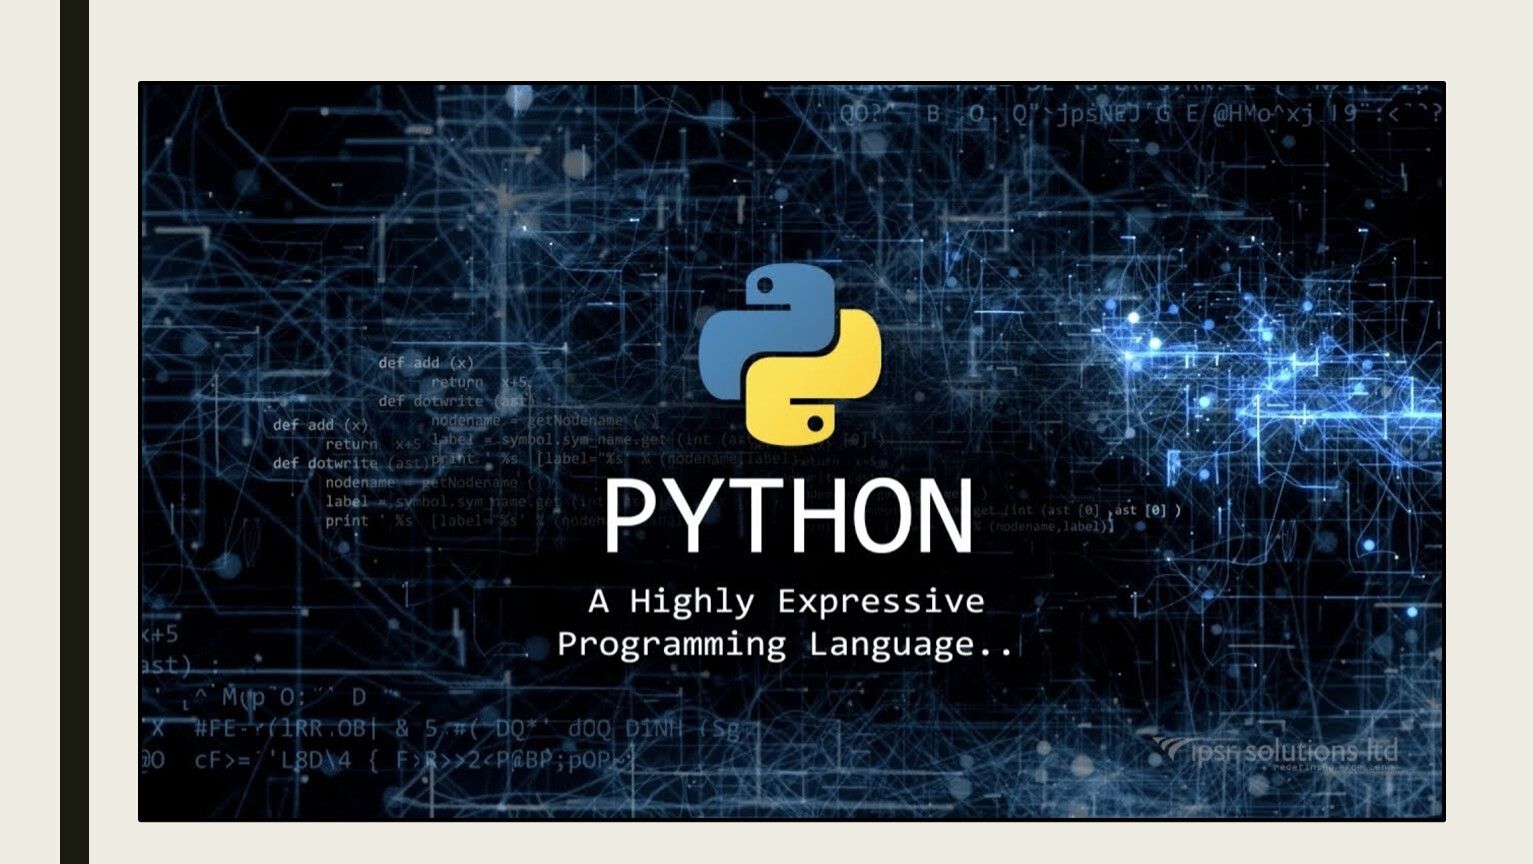 Programming in python 3. Питон язык программирования. Язык програмирования пион. Язык програмирования Митон. Питонтязык программирования.